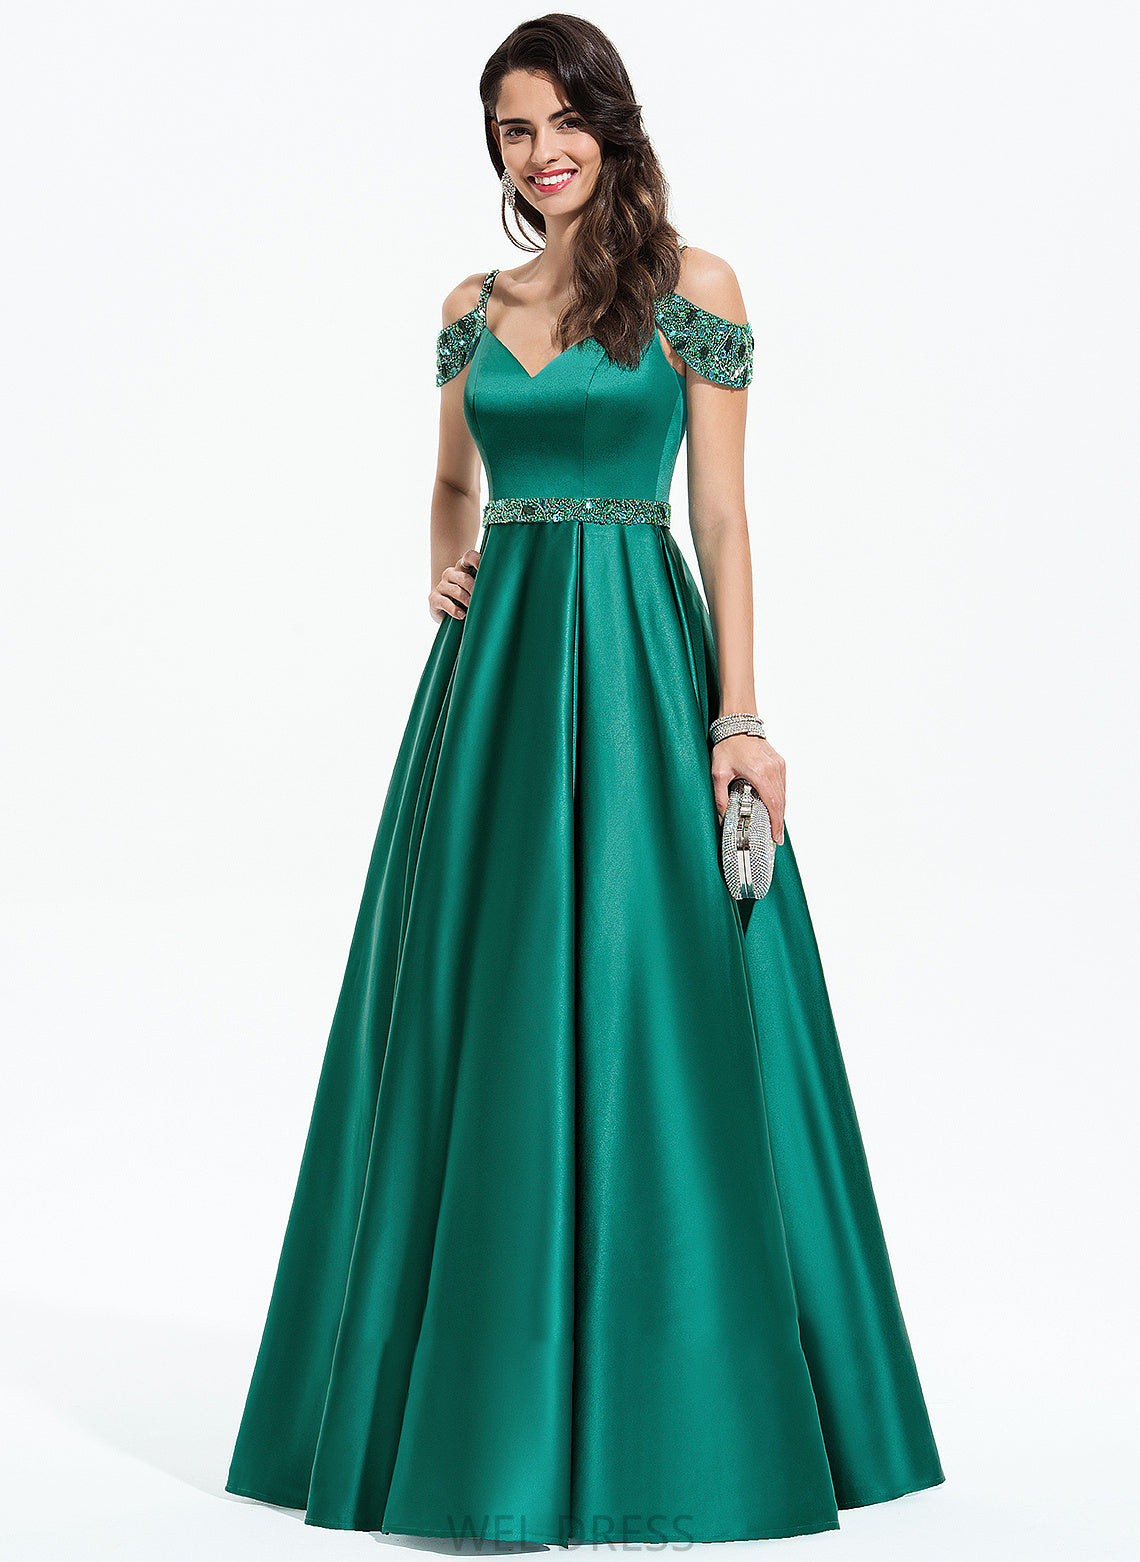 Esperanza Ball-Gown/Princess Prom Dresses Satin V-neck Floor-Length Sequins Beading With